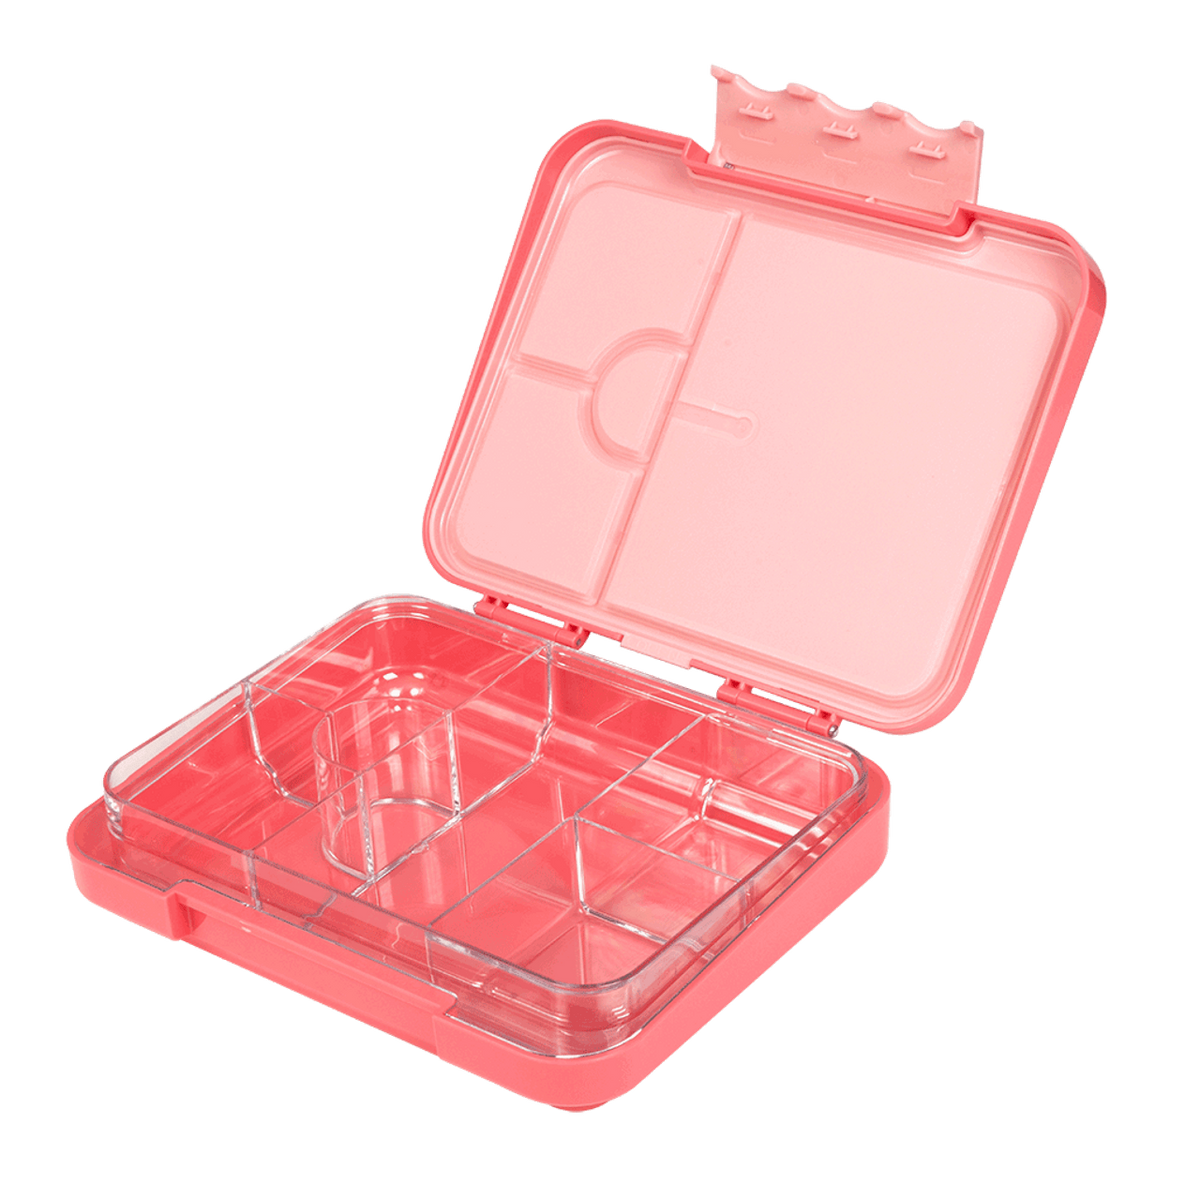 Big Bento Box - Pink